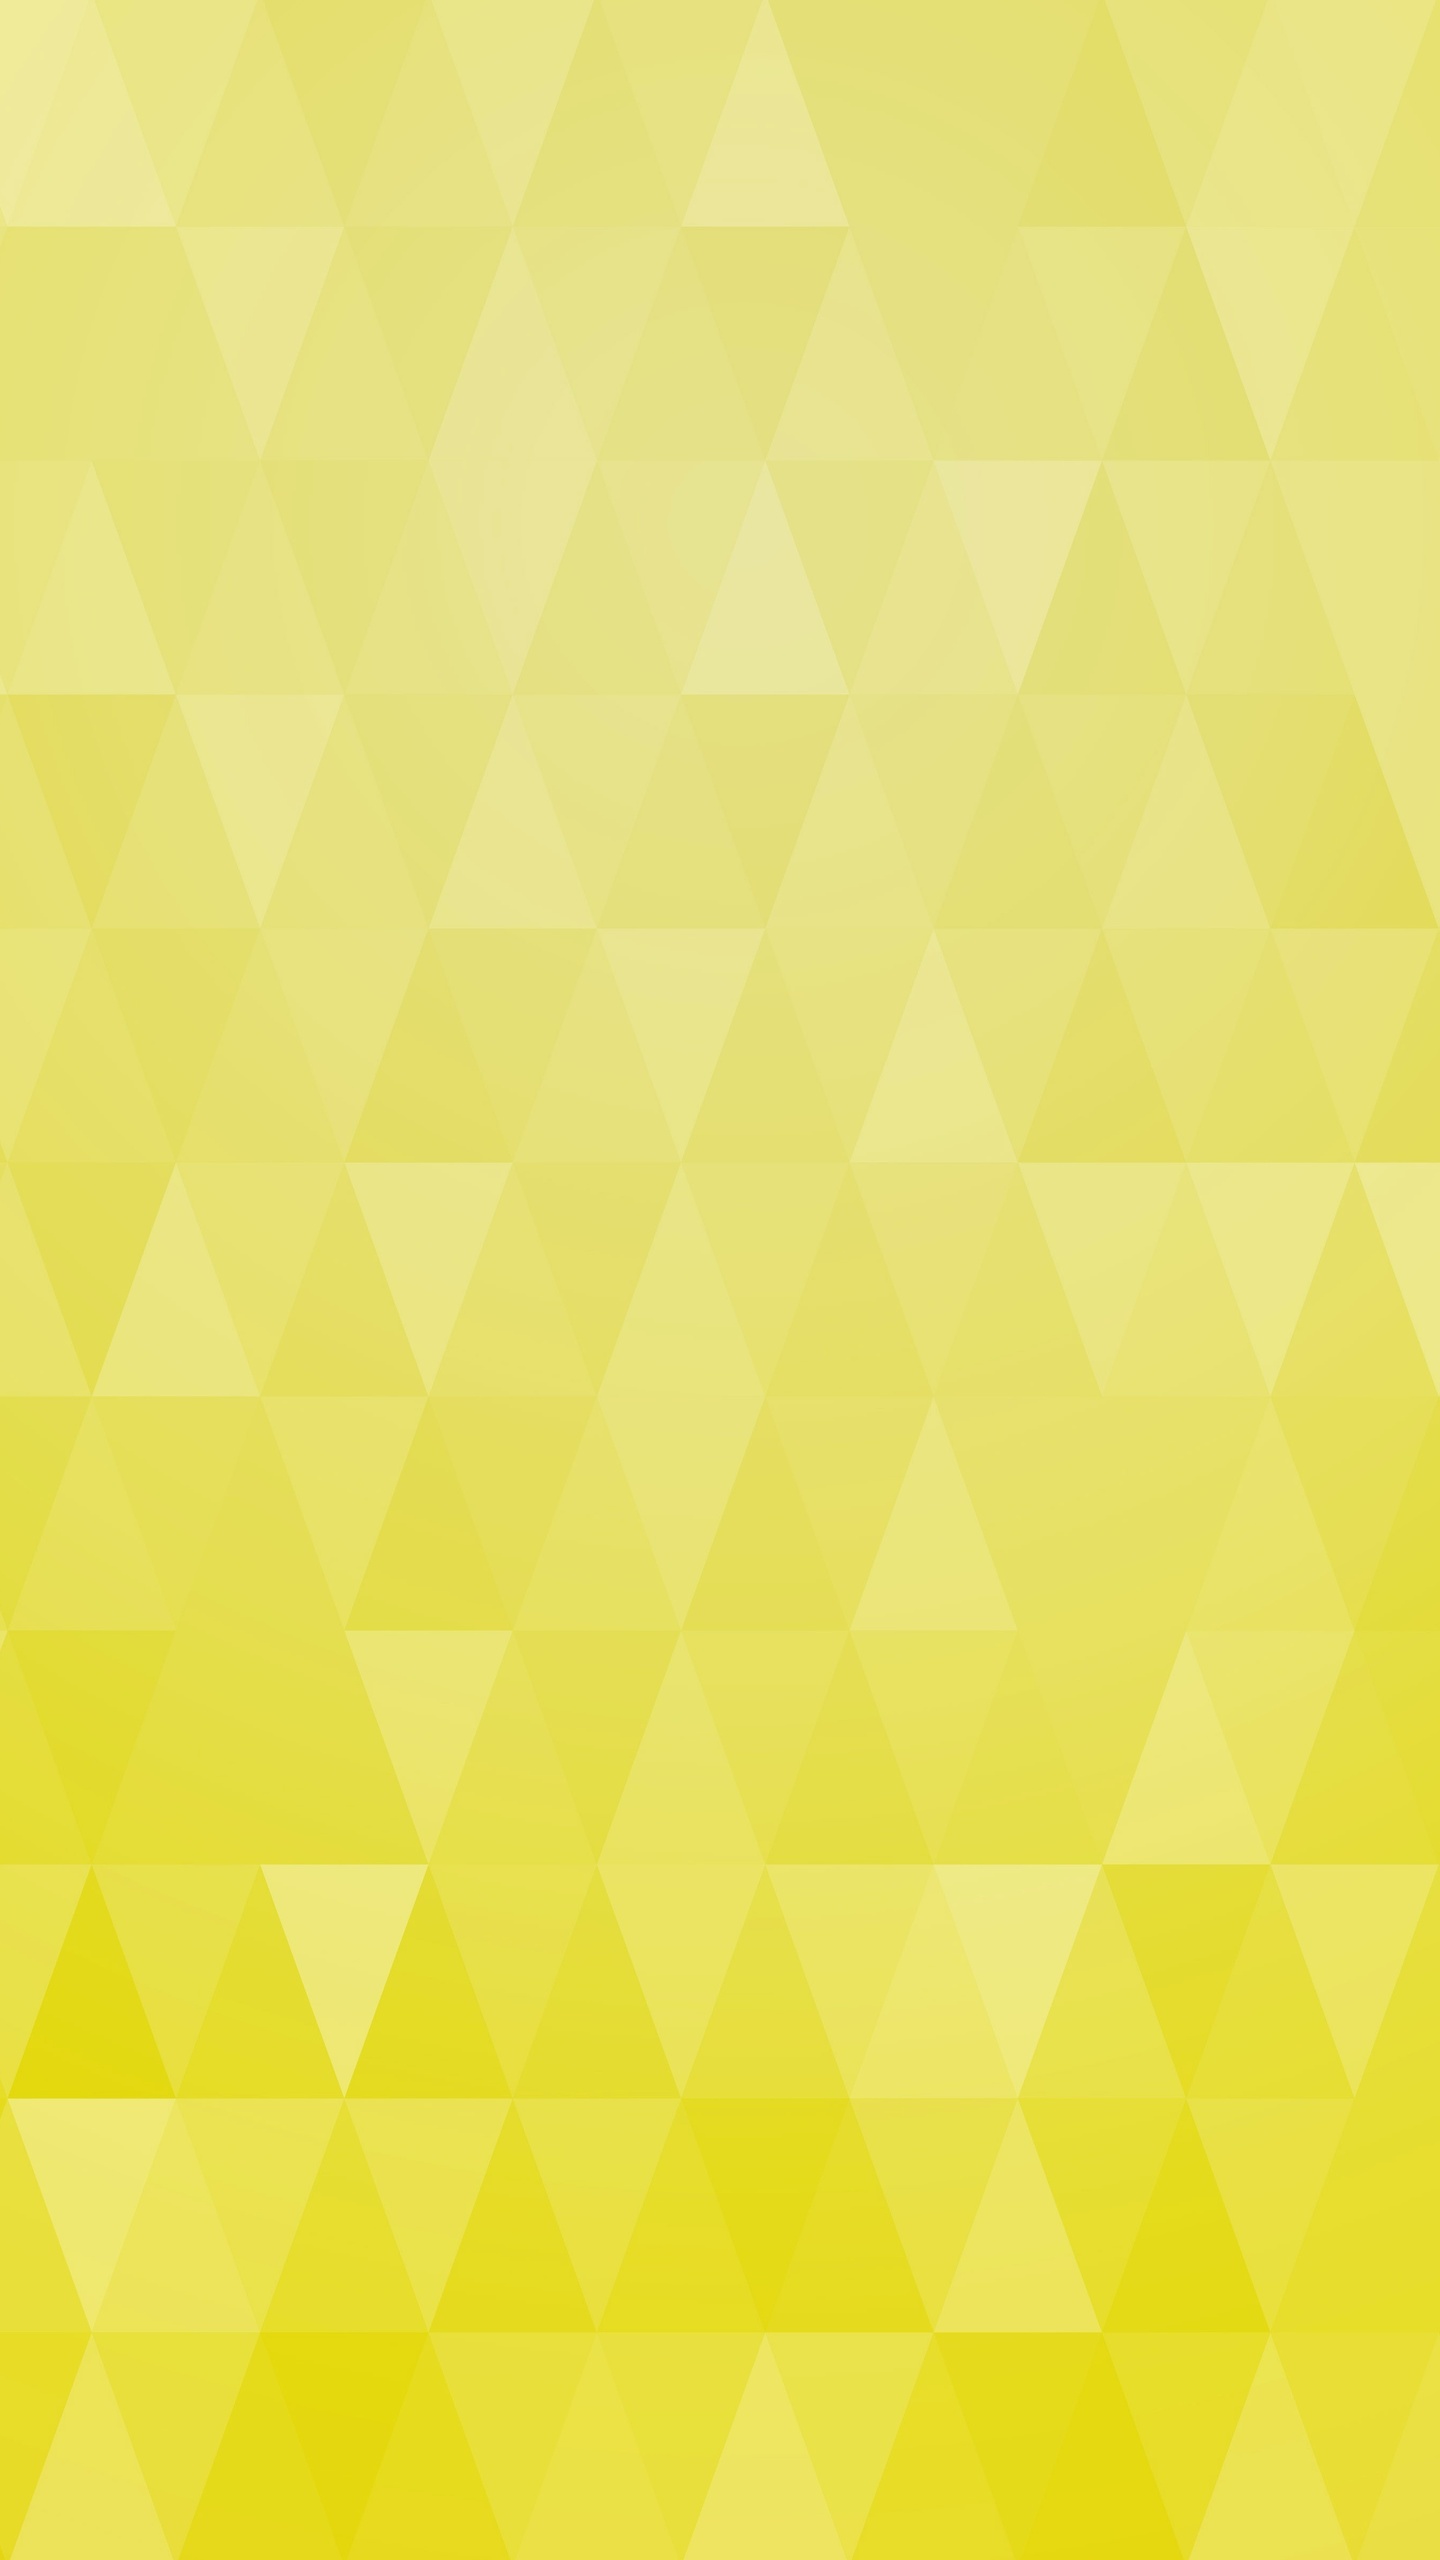 artistic-pattern-triangle-yellow-8k-0d.jpg